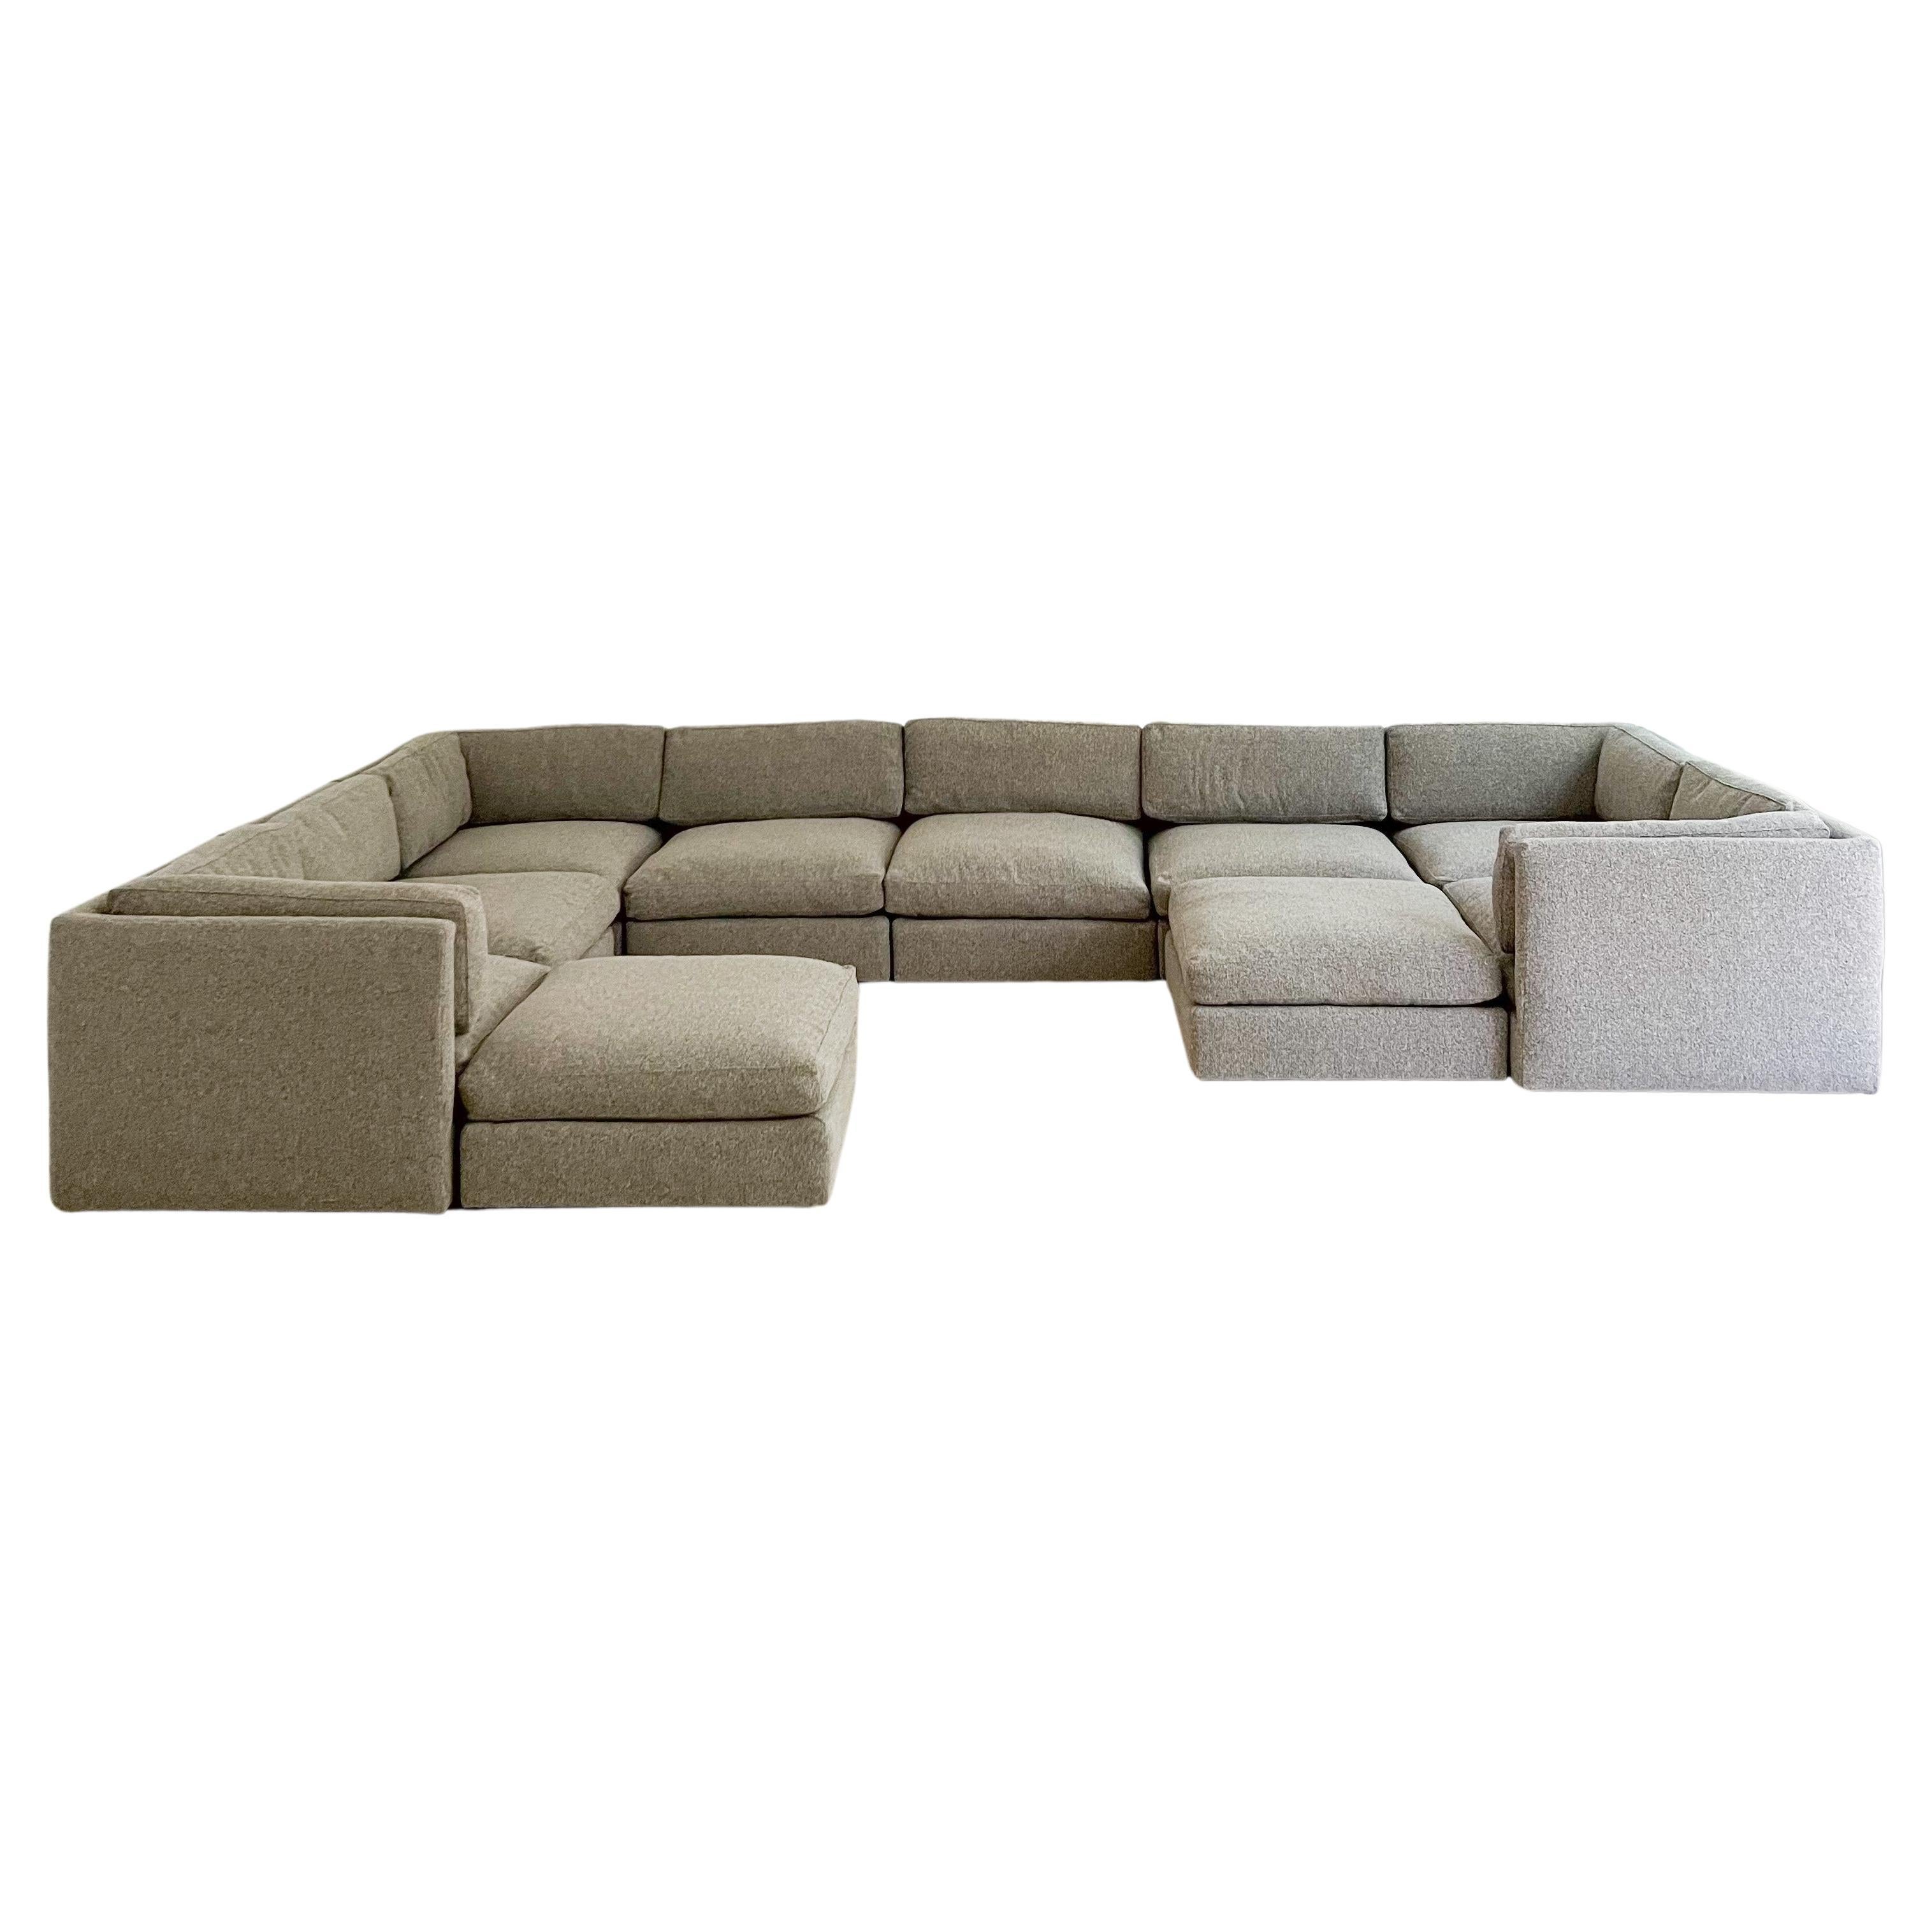 Milo Baughman Attributed 10 Piece Modular Sectional Sofa, New Upholstery